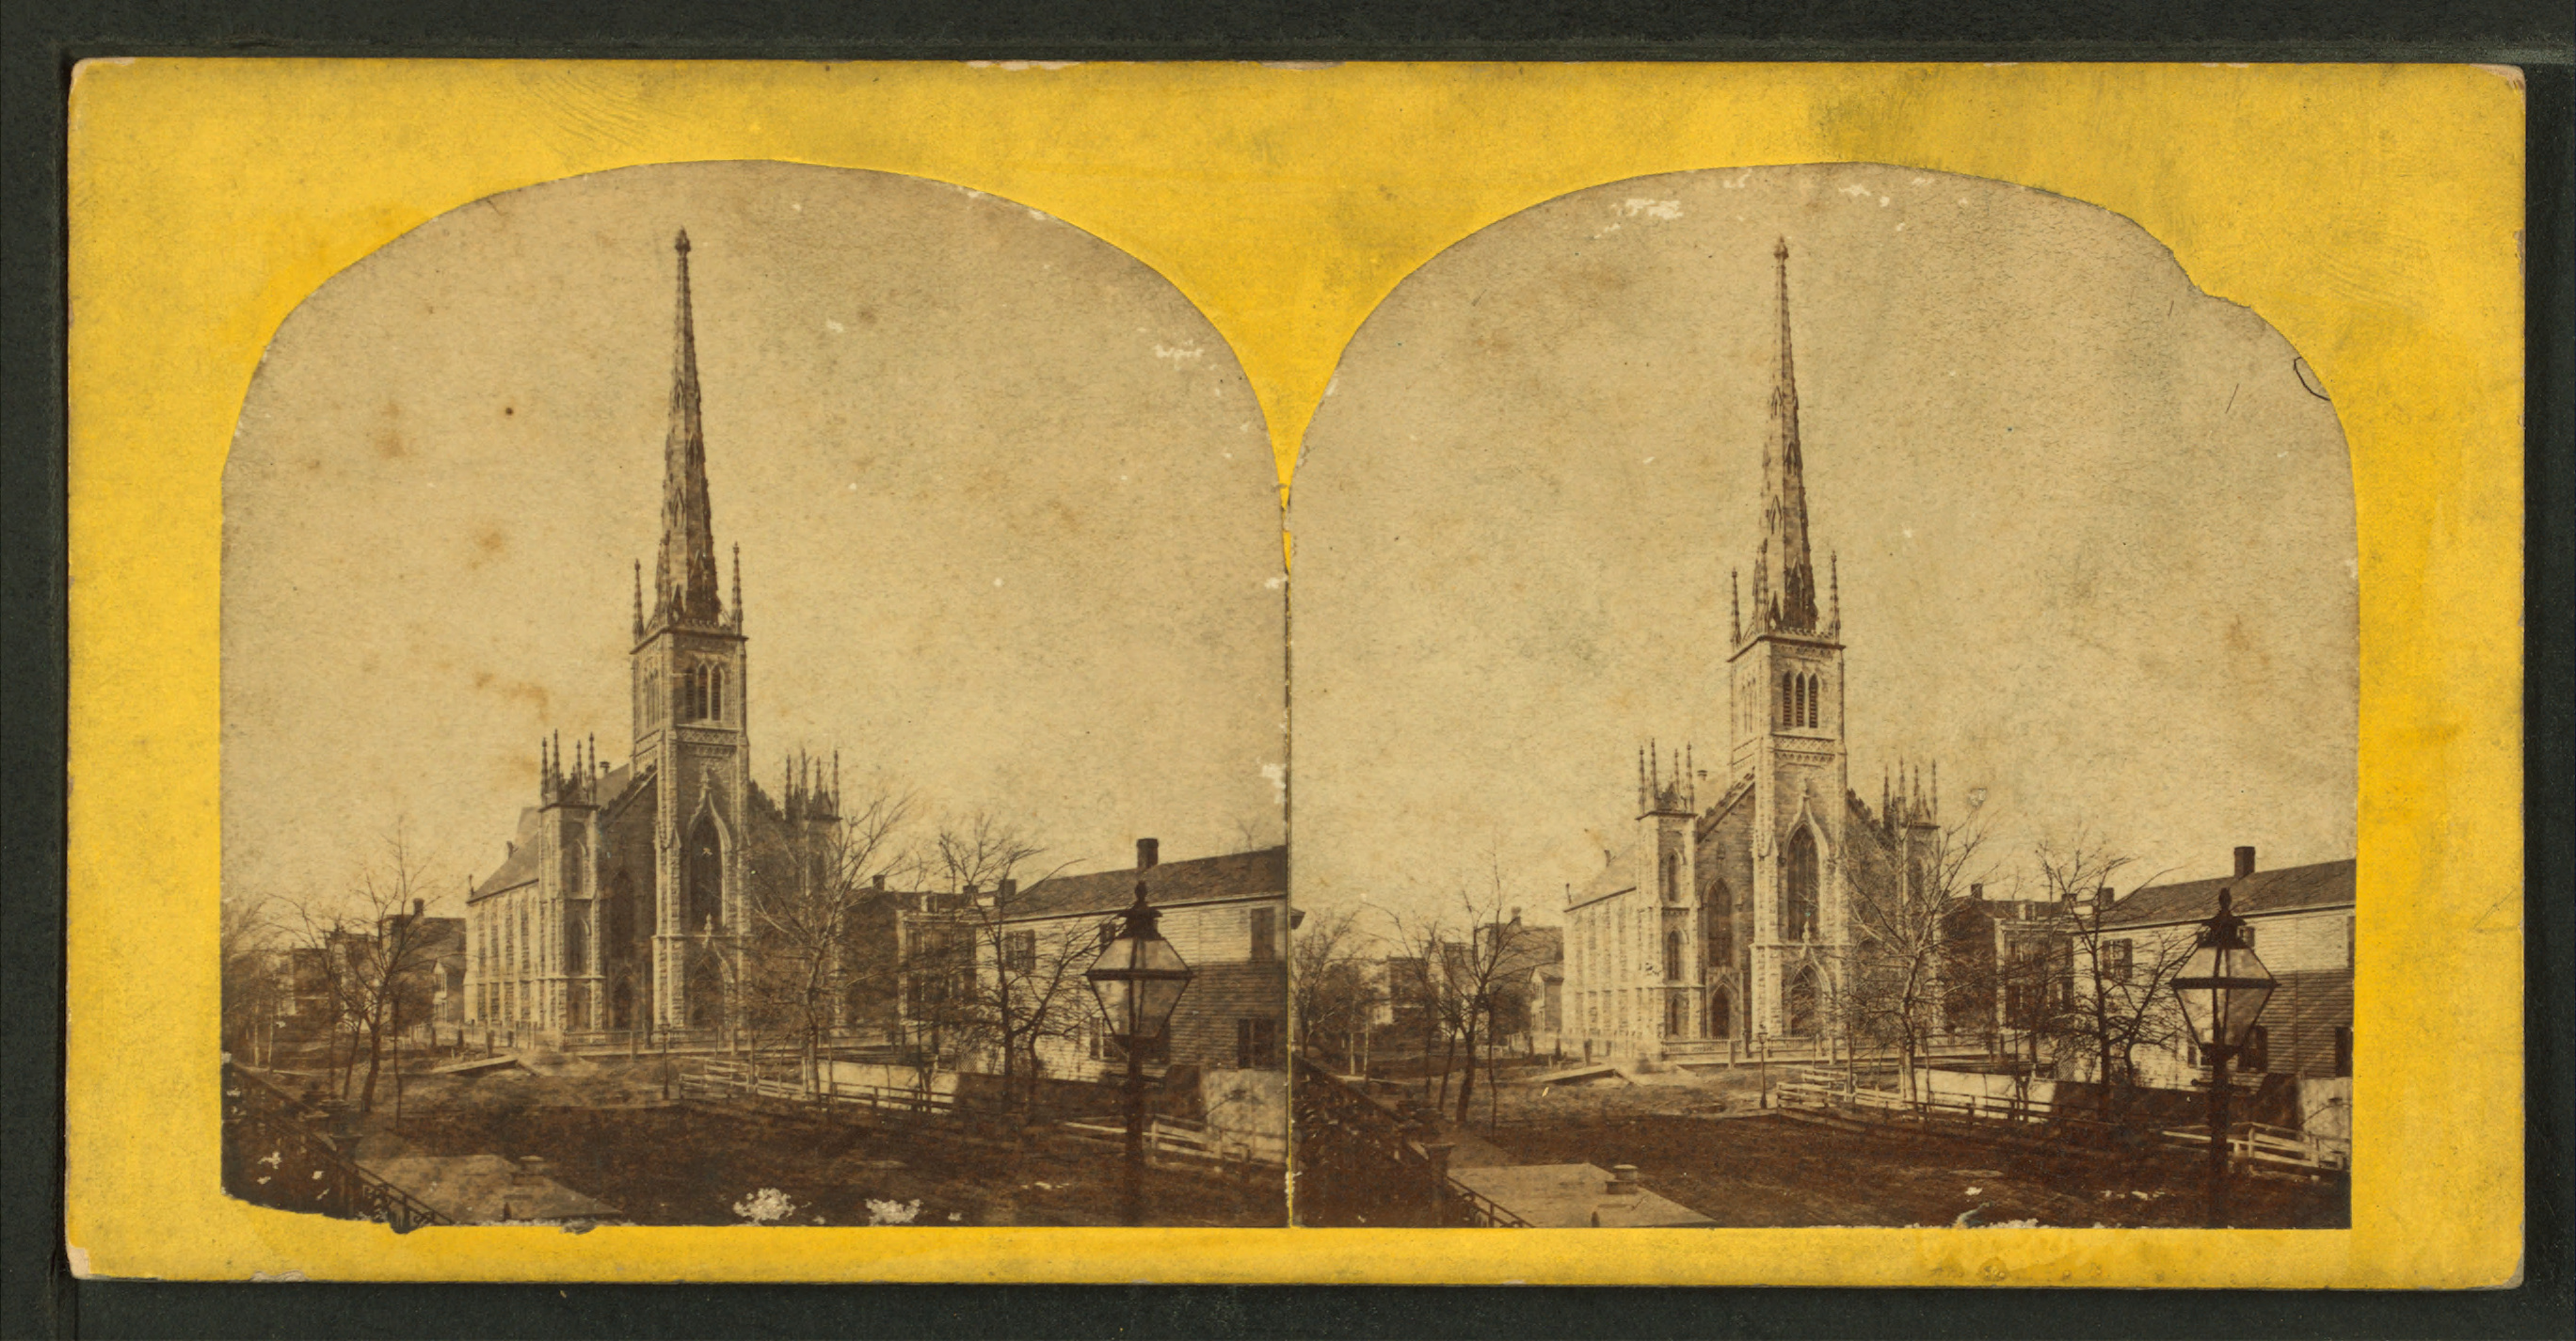 St. Paul's Church, by Carbutt, John, 1832-1905